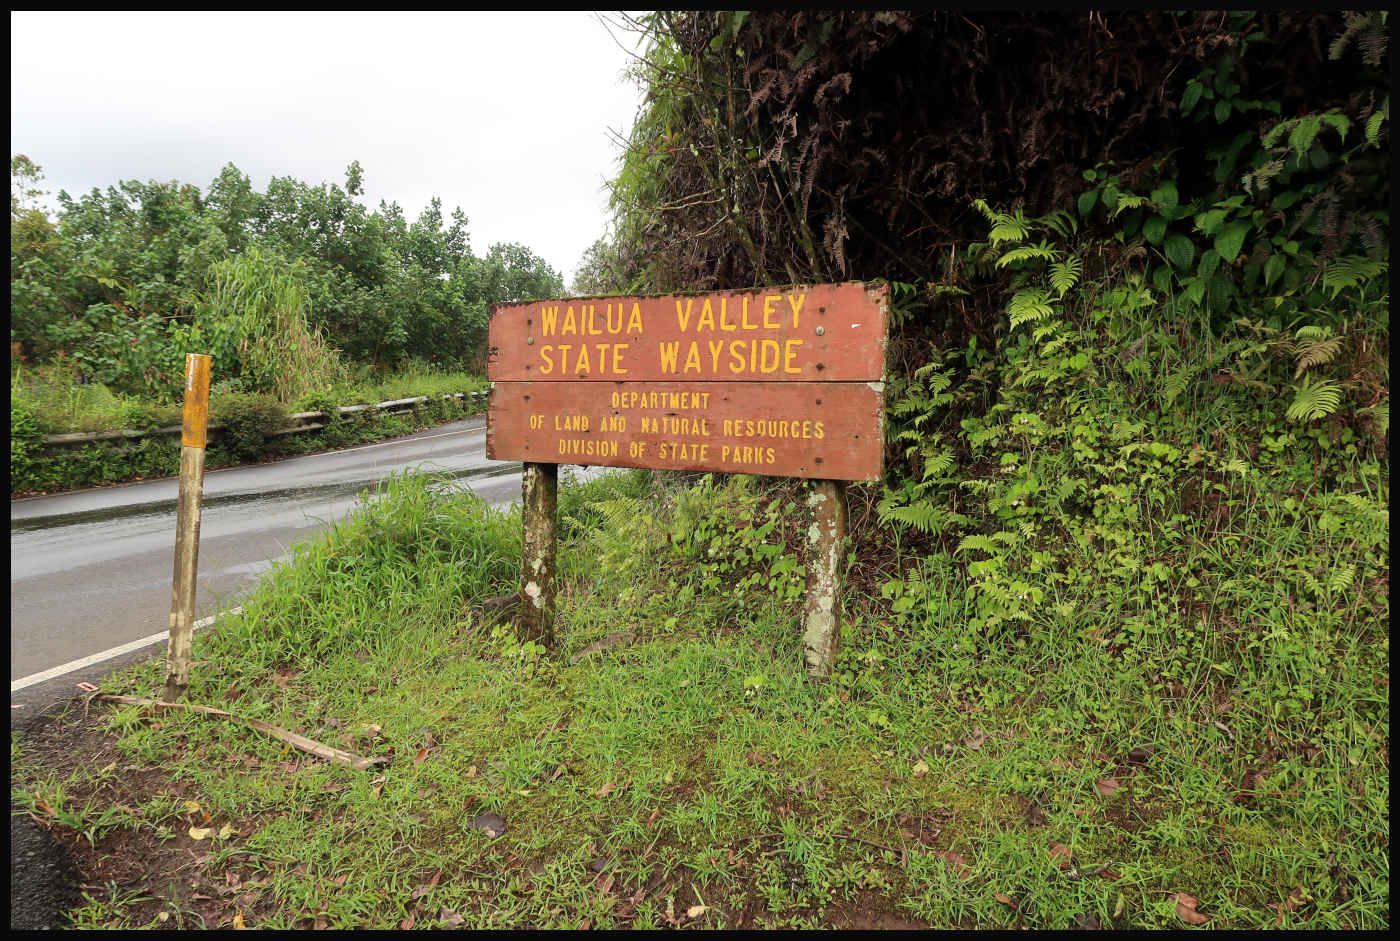 Wailua Valley State Wayside